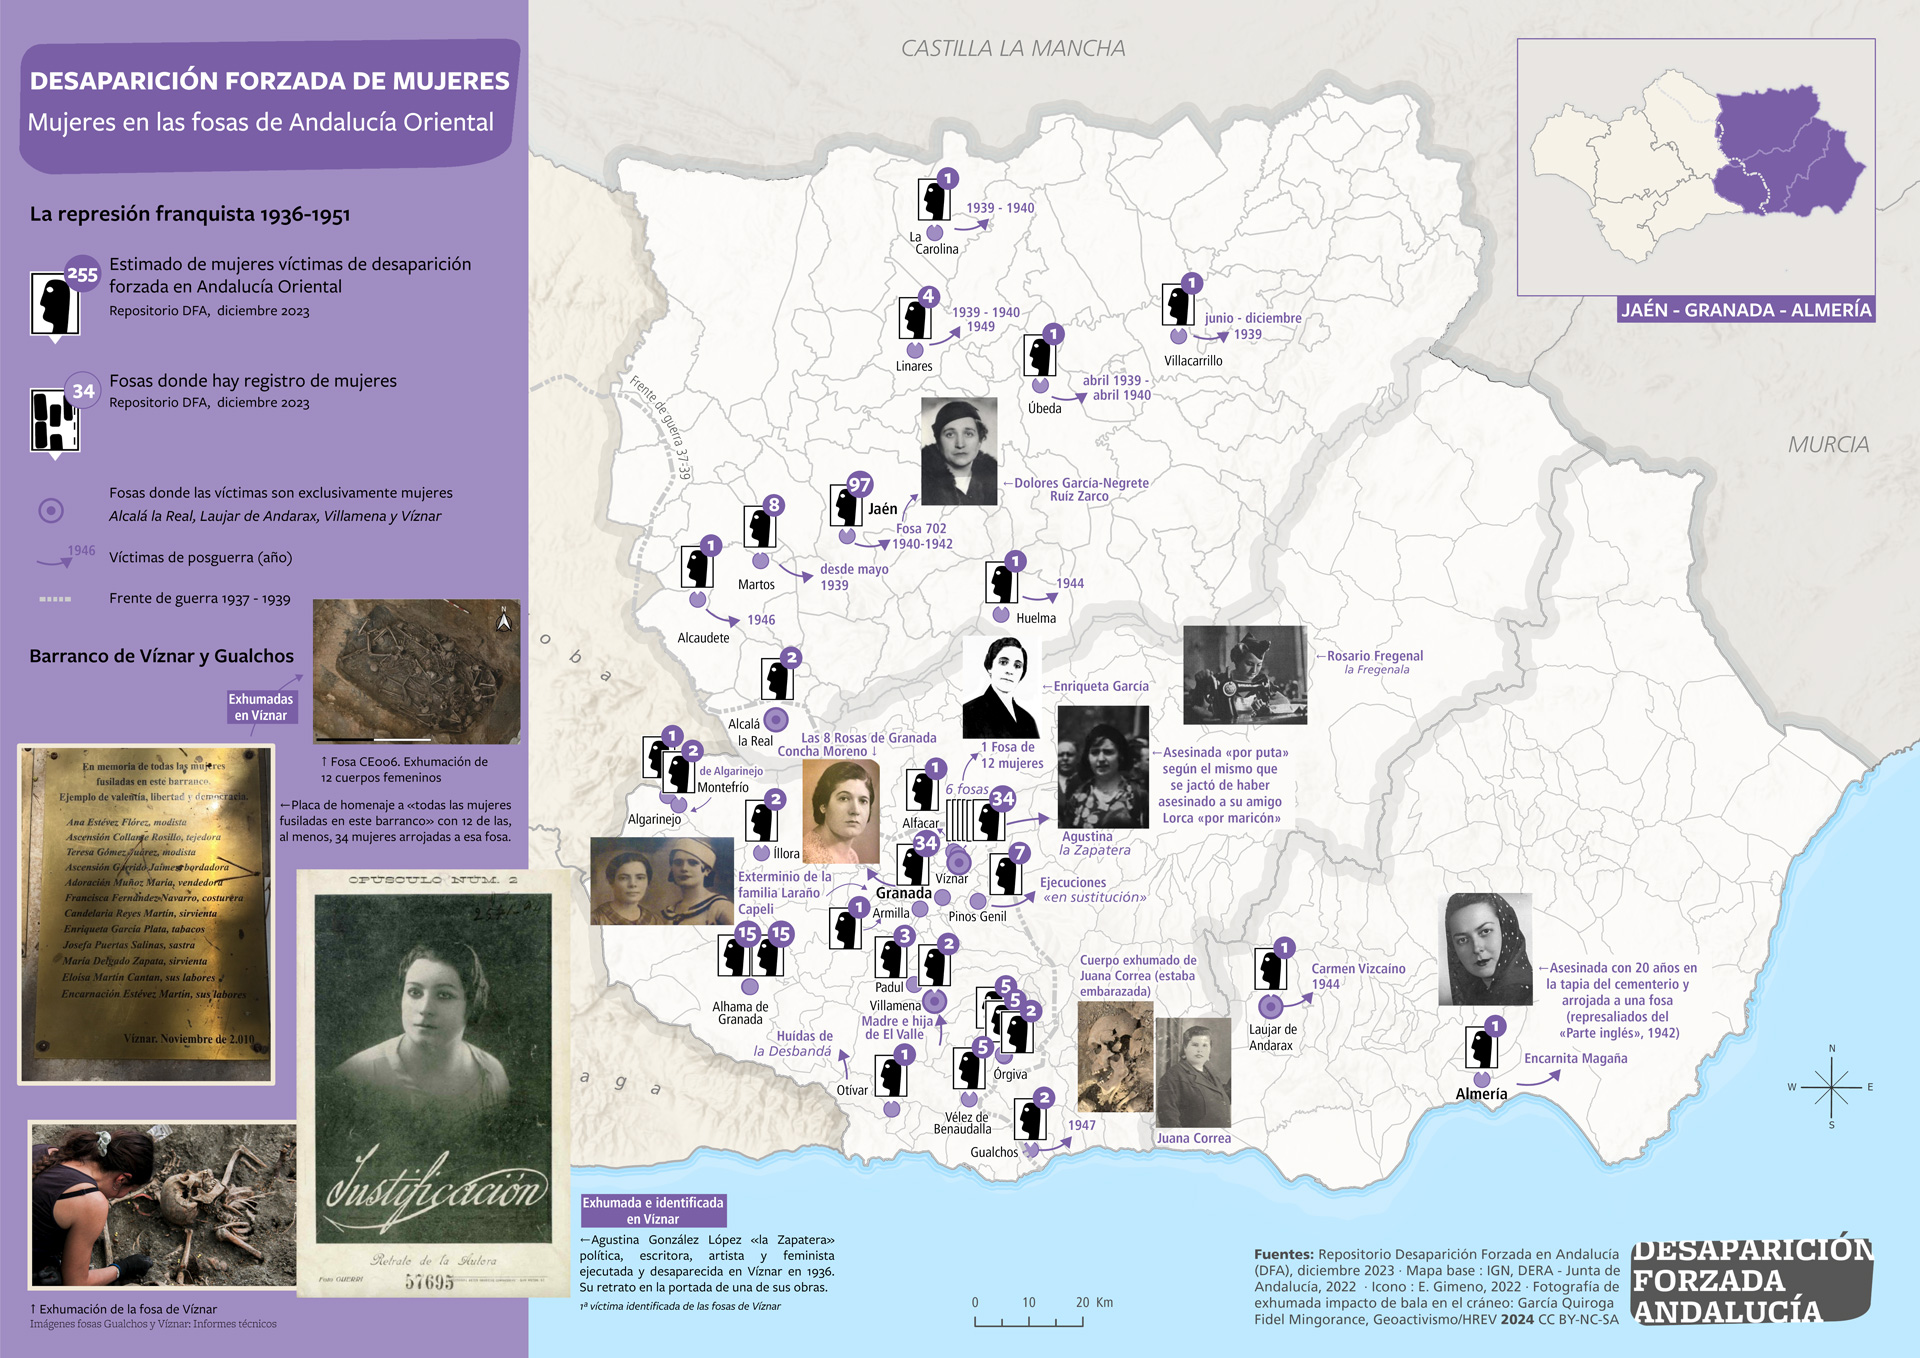 Desaparición forzada de mujeres en Andalucía oriental